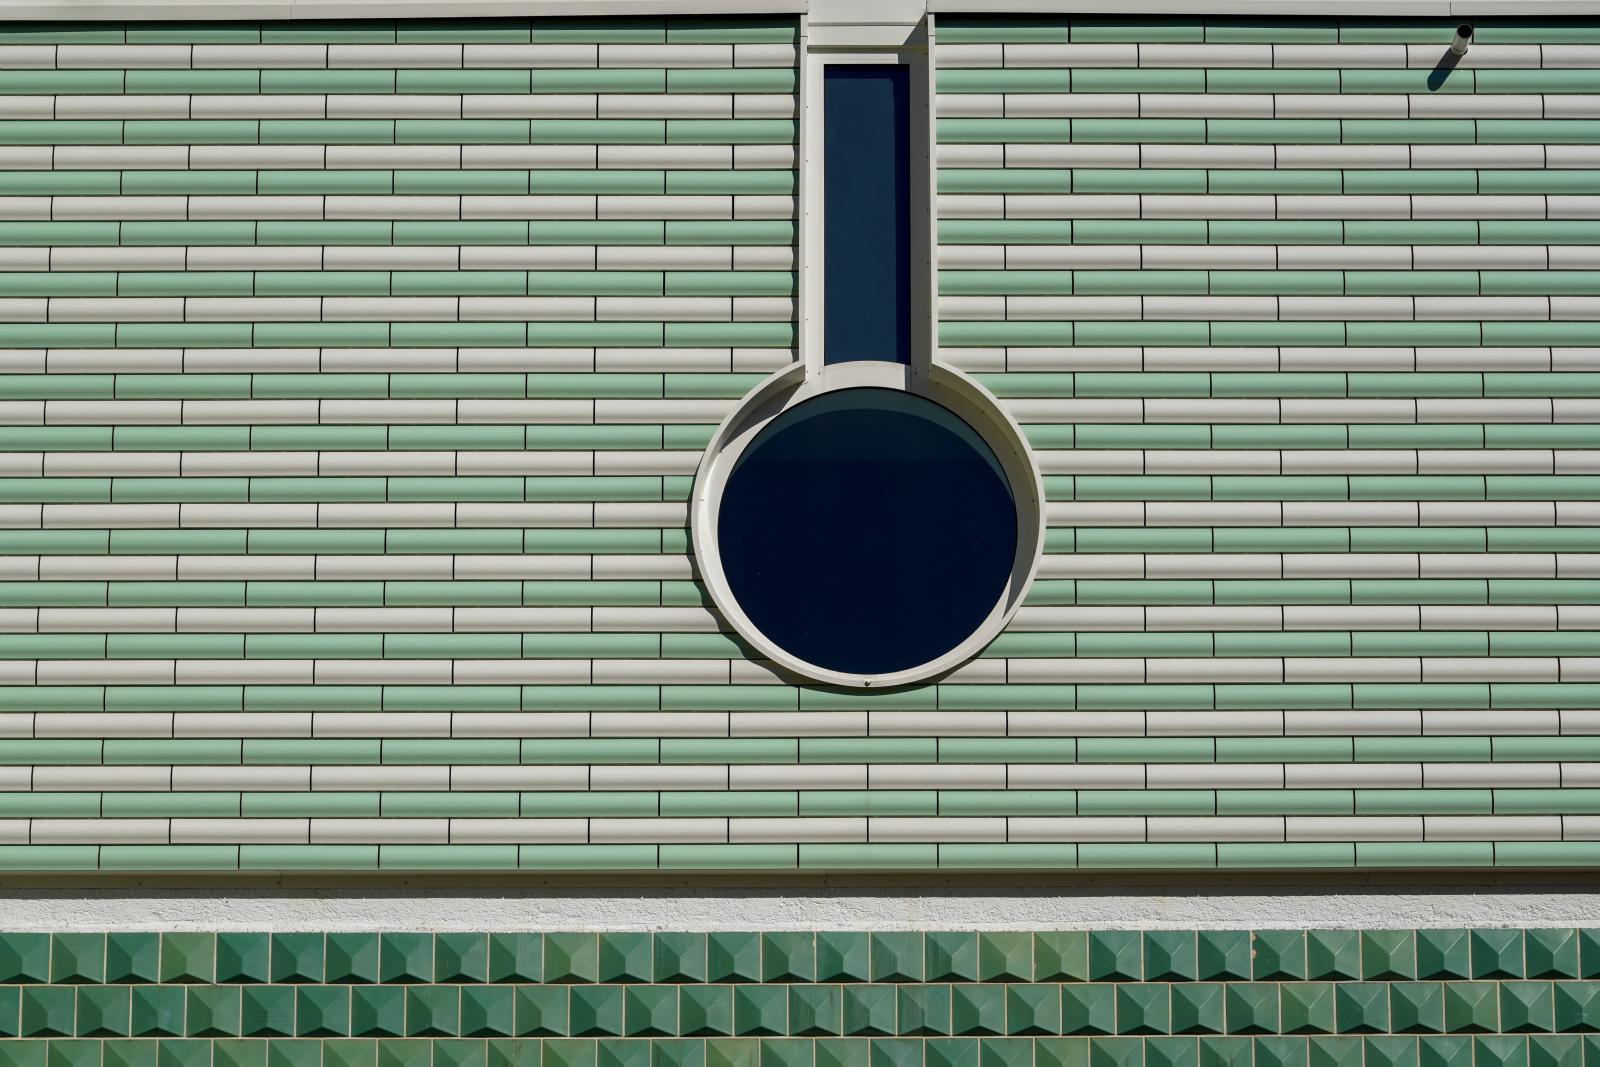 Geometry in Harmony: Circular Window on Tiled Facade | Buy this image